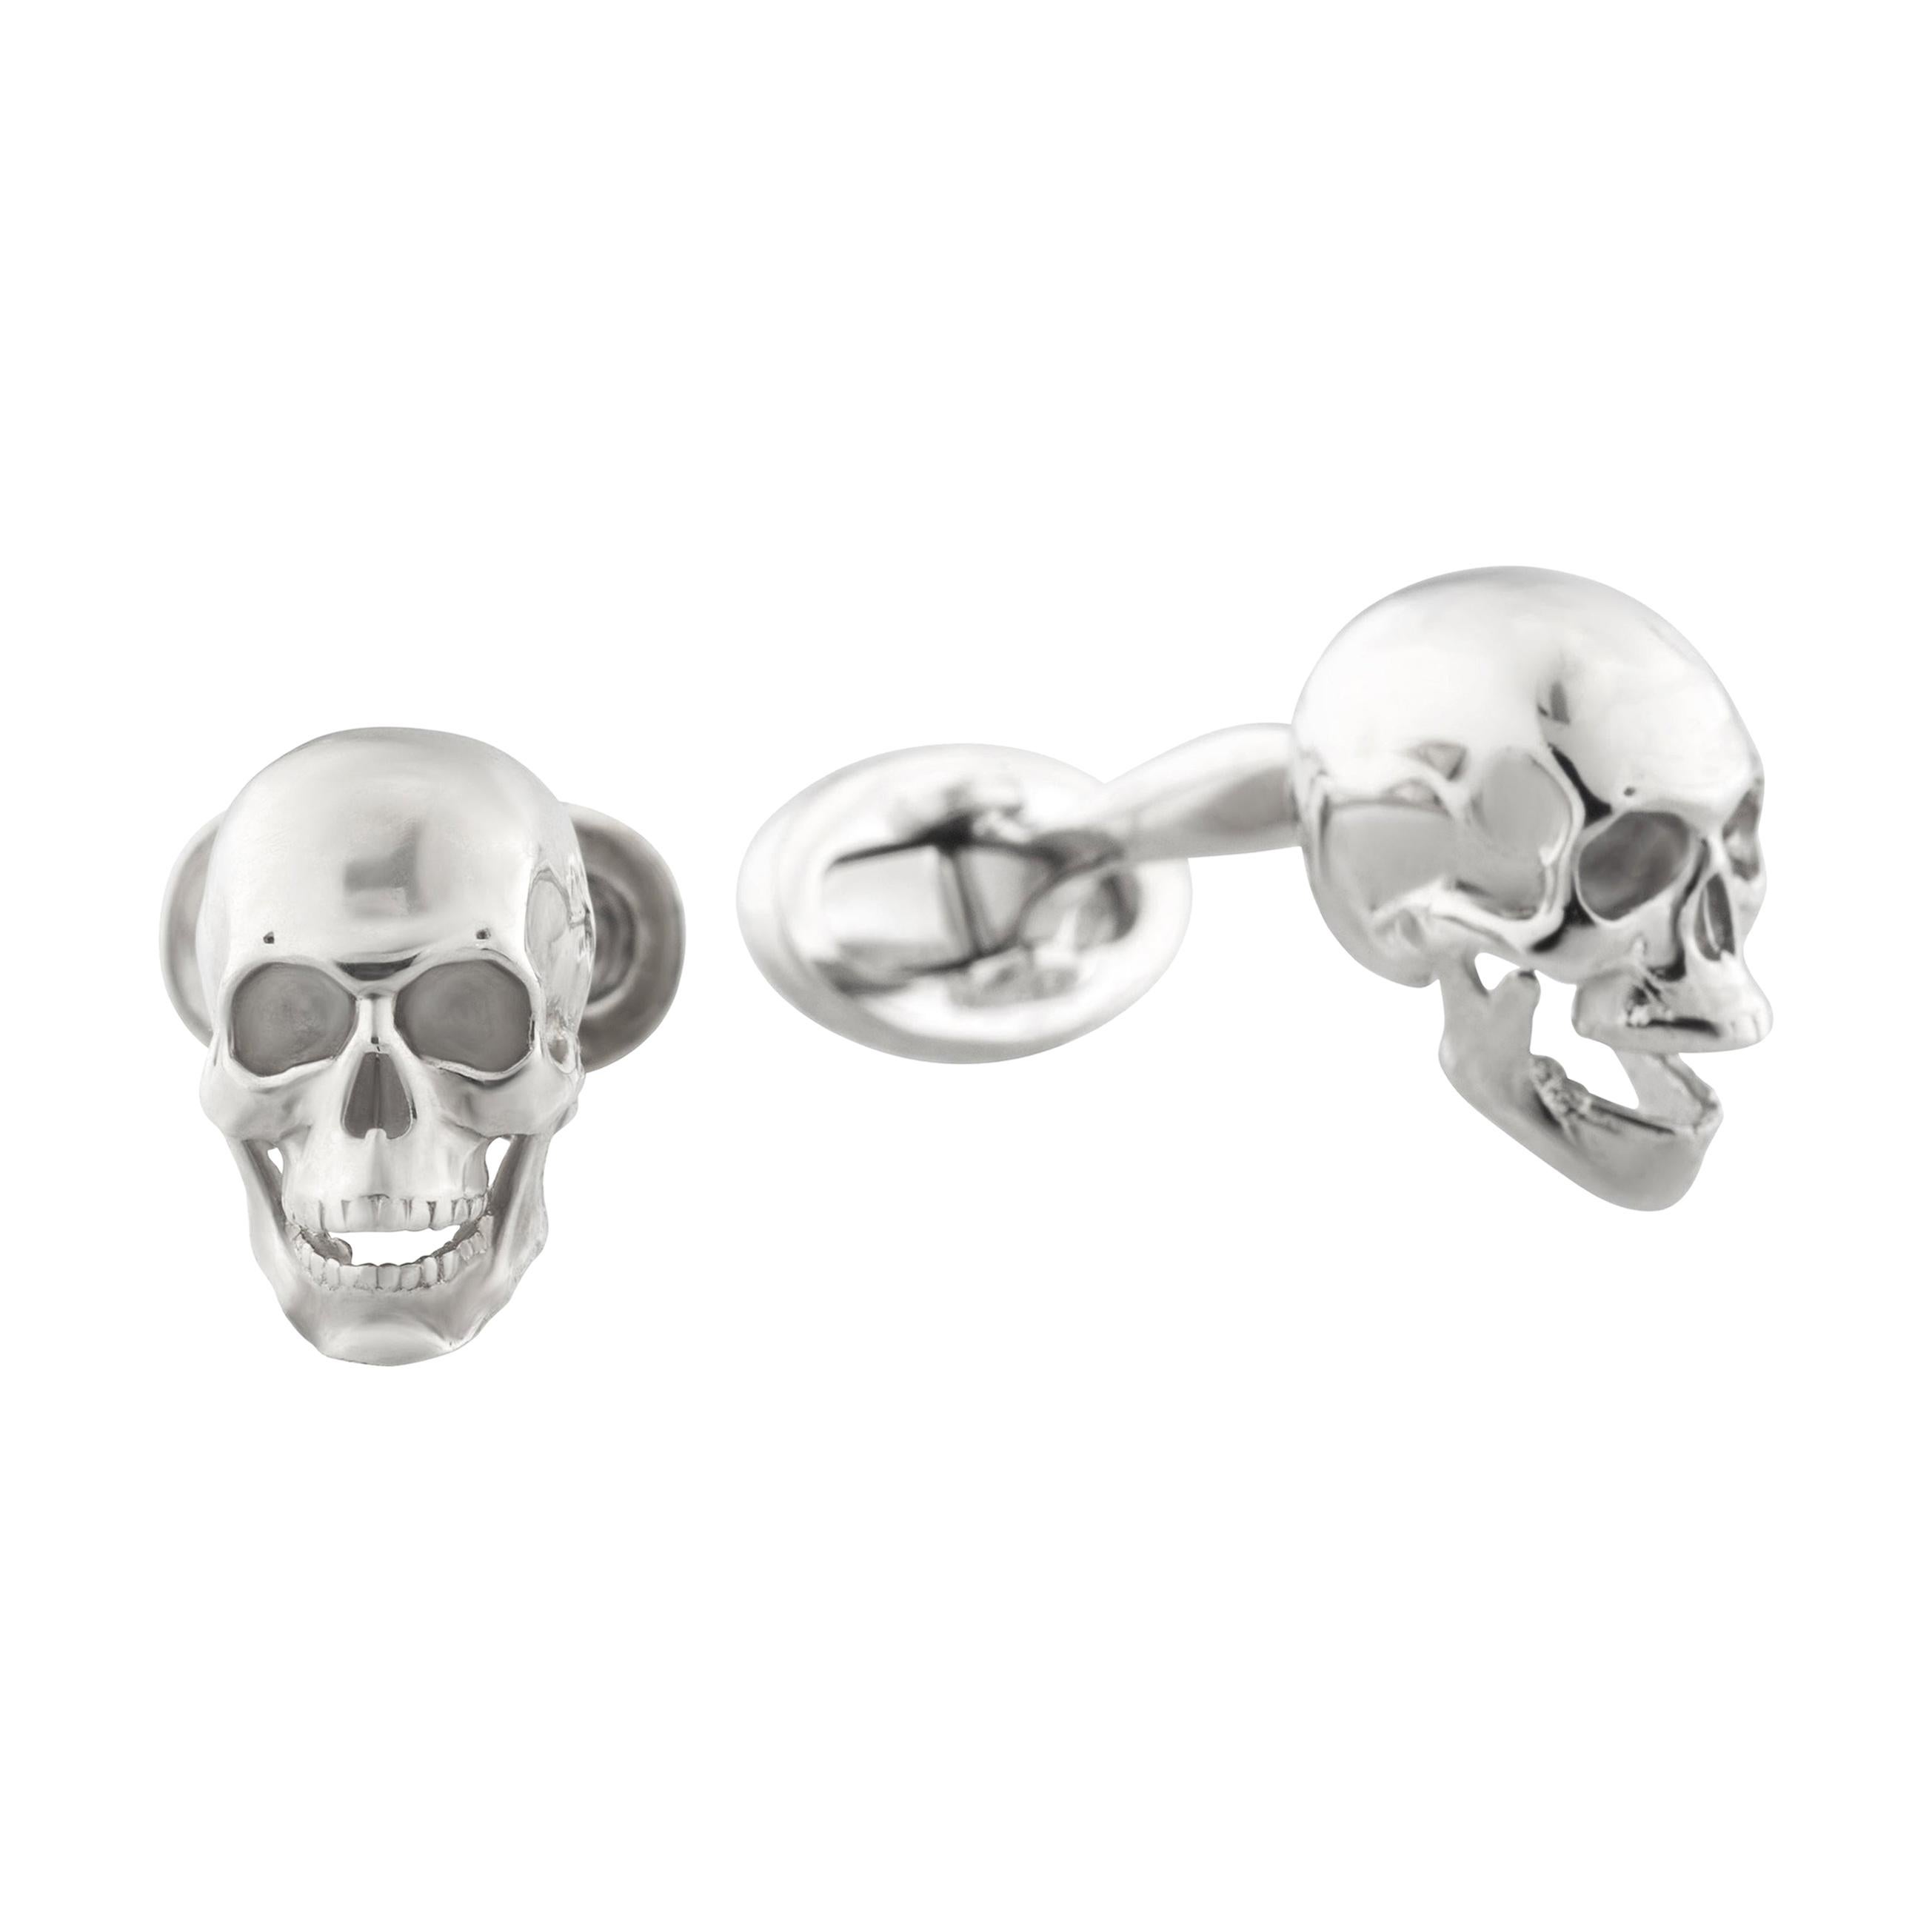 "Poor Yorick" Skull Handmade Cufflinks in Sterling Silver by Fils Unique For Sale